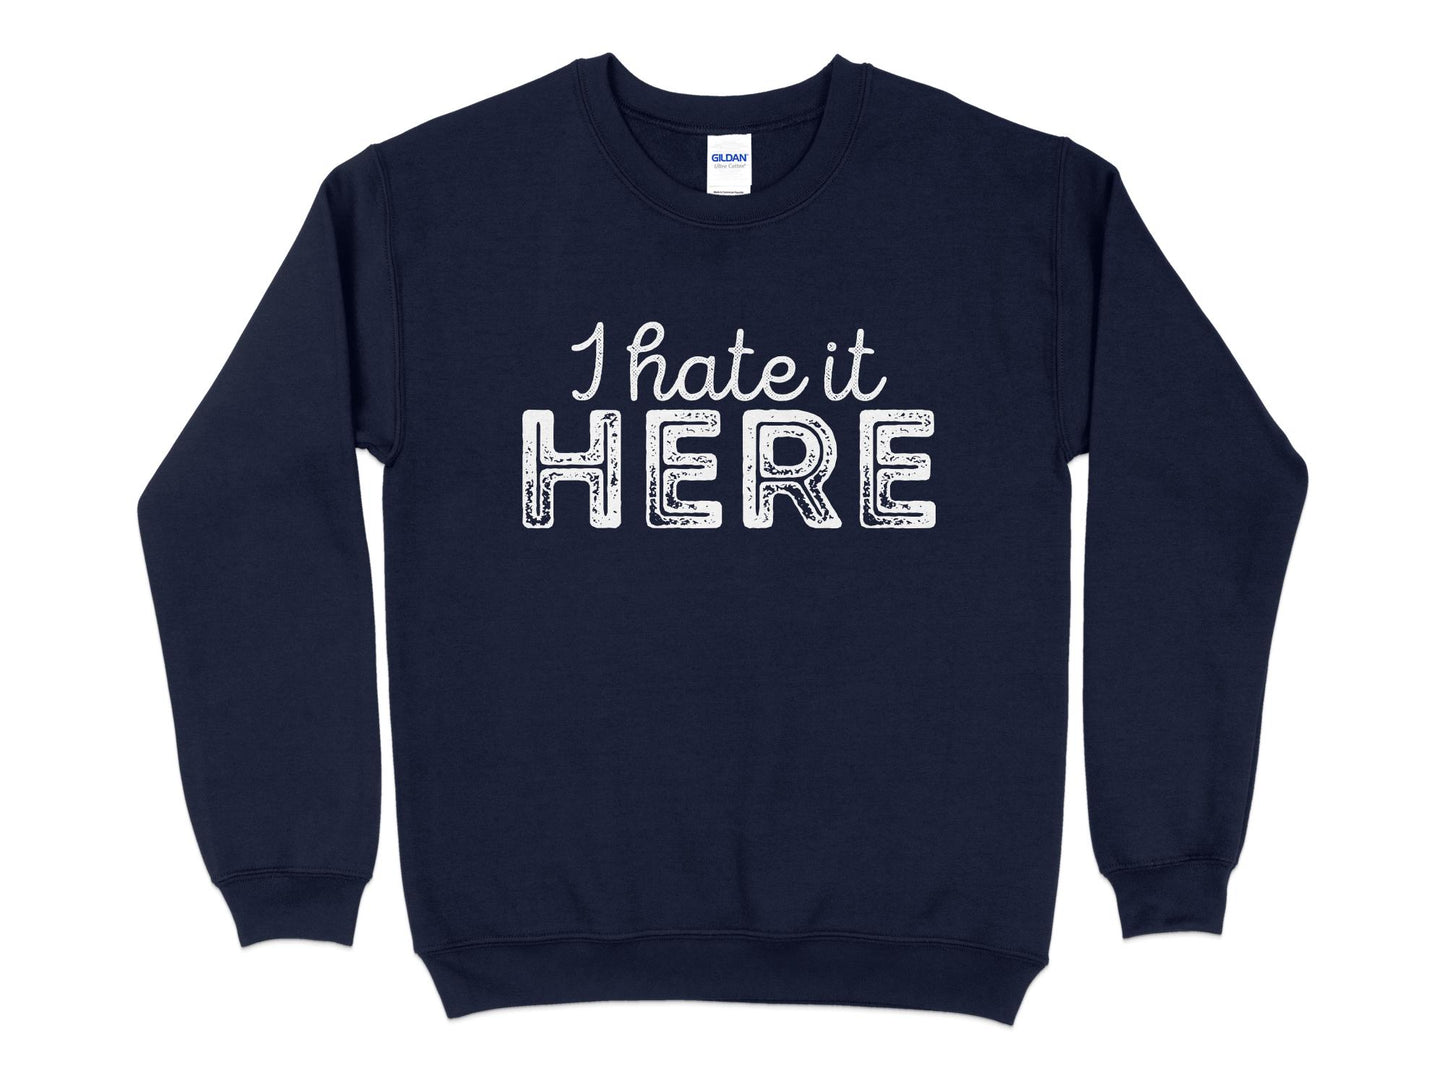 I Hate it Here Sweatshirt, navy blue